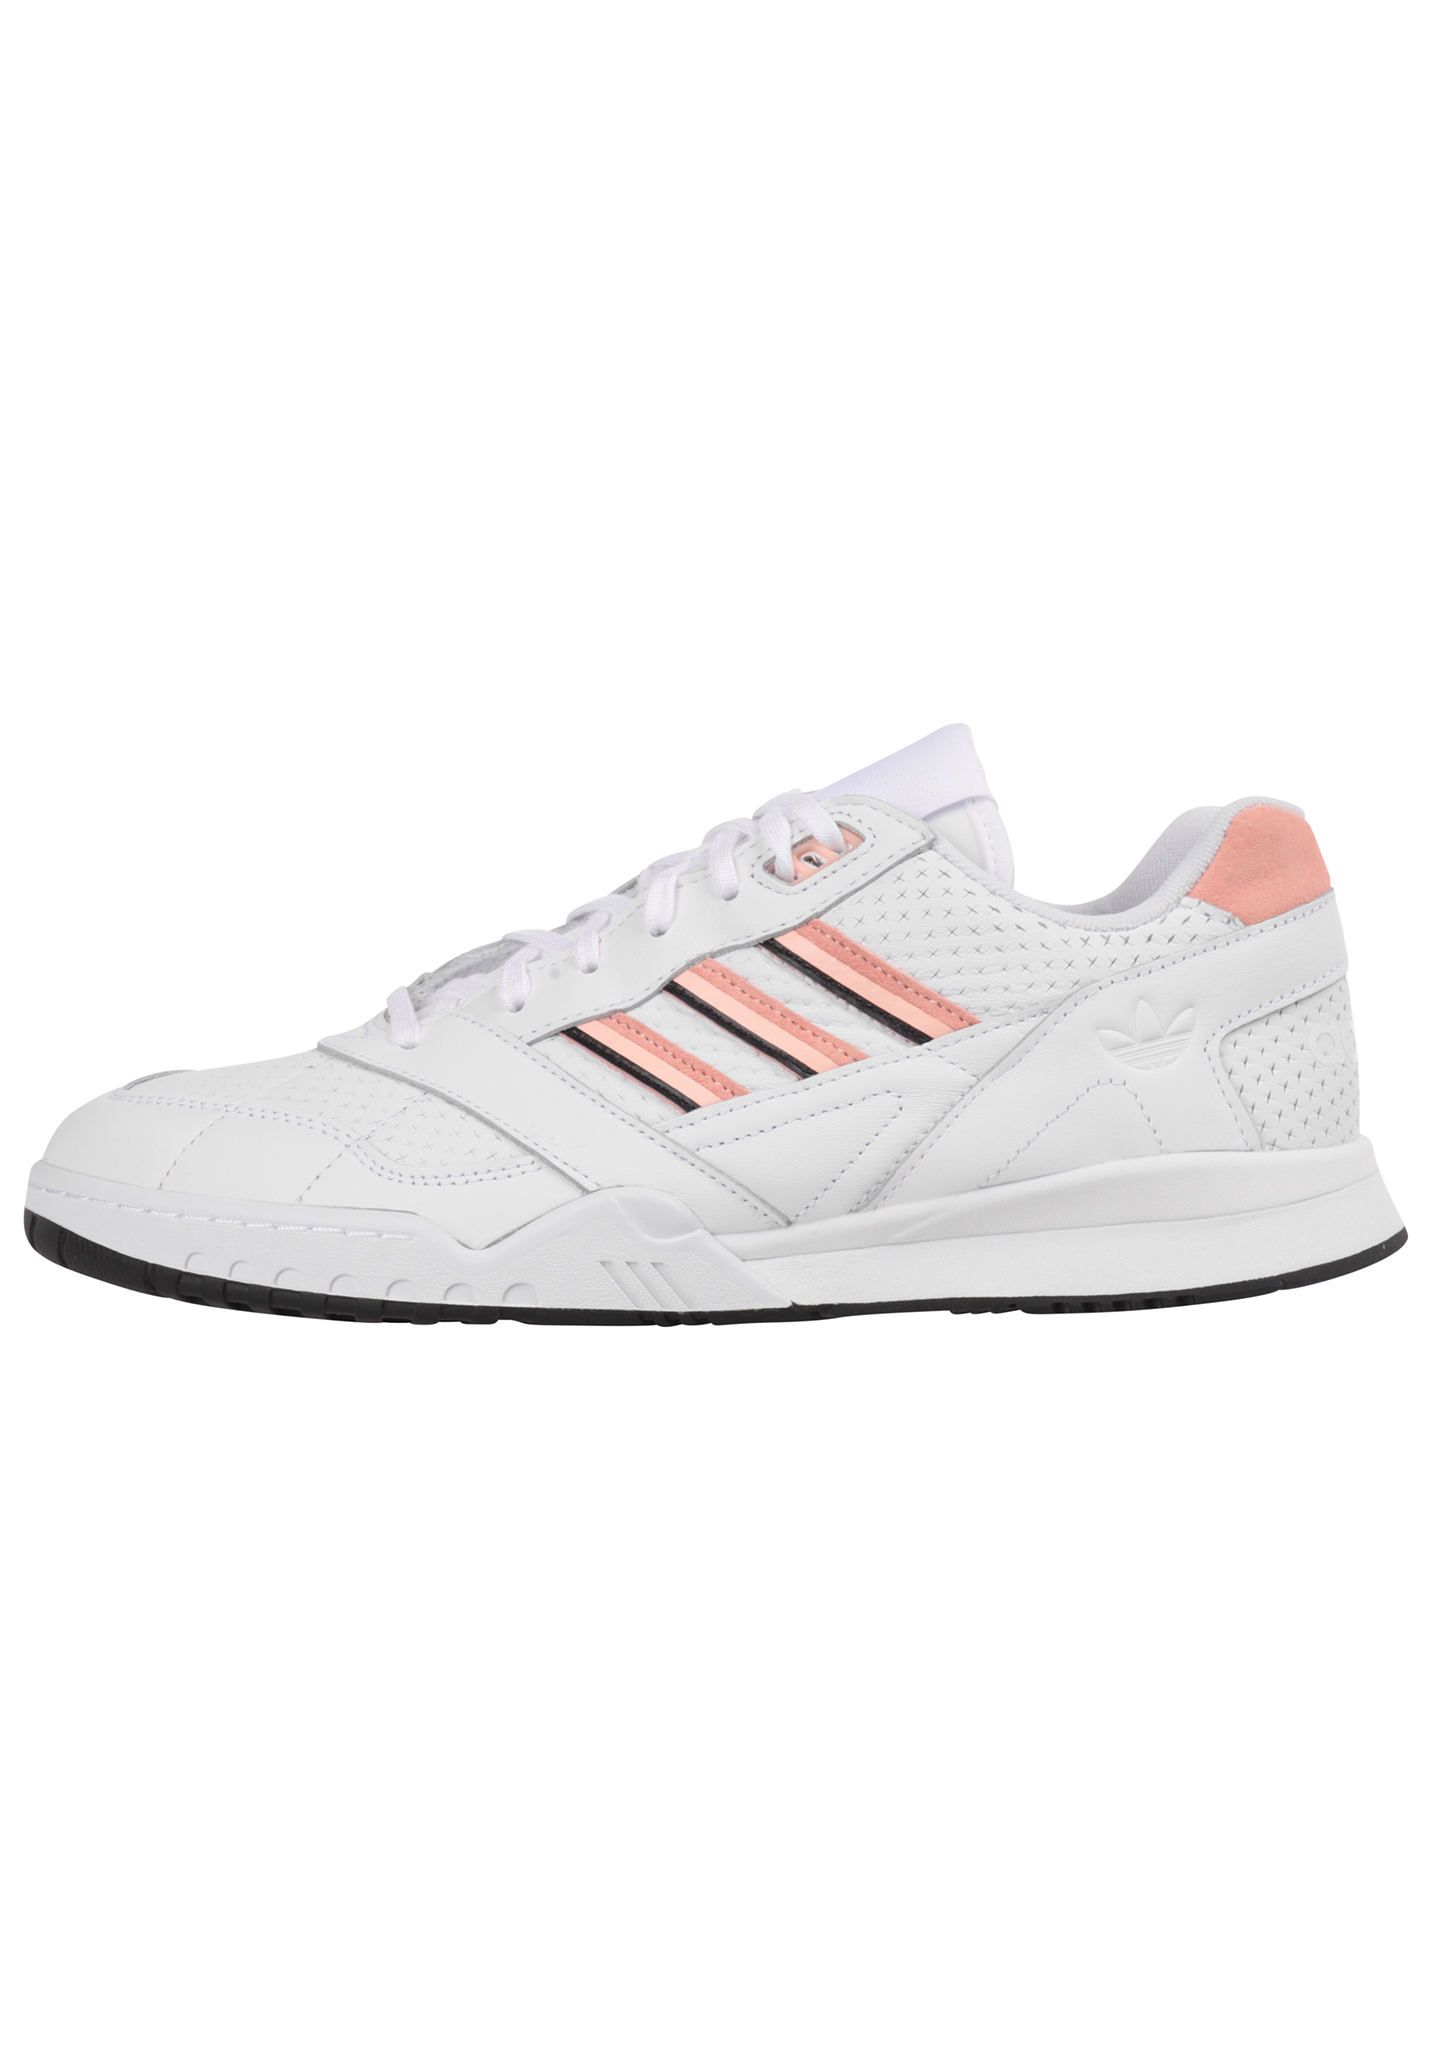 Adidas Originals A.R. Trainer Sneaker Low white - pink 45 1/3